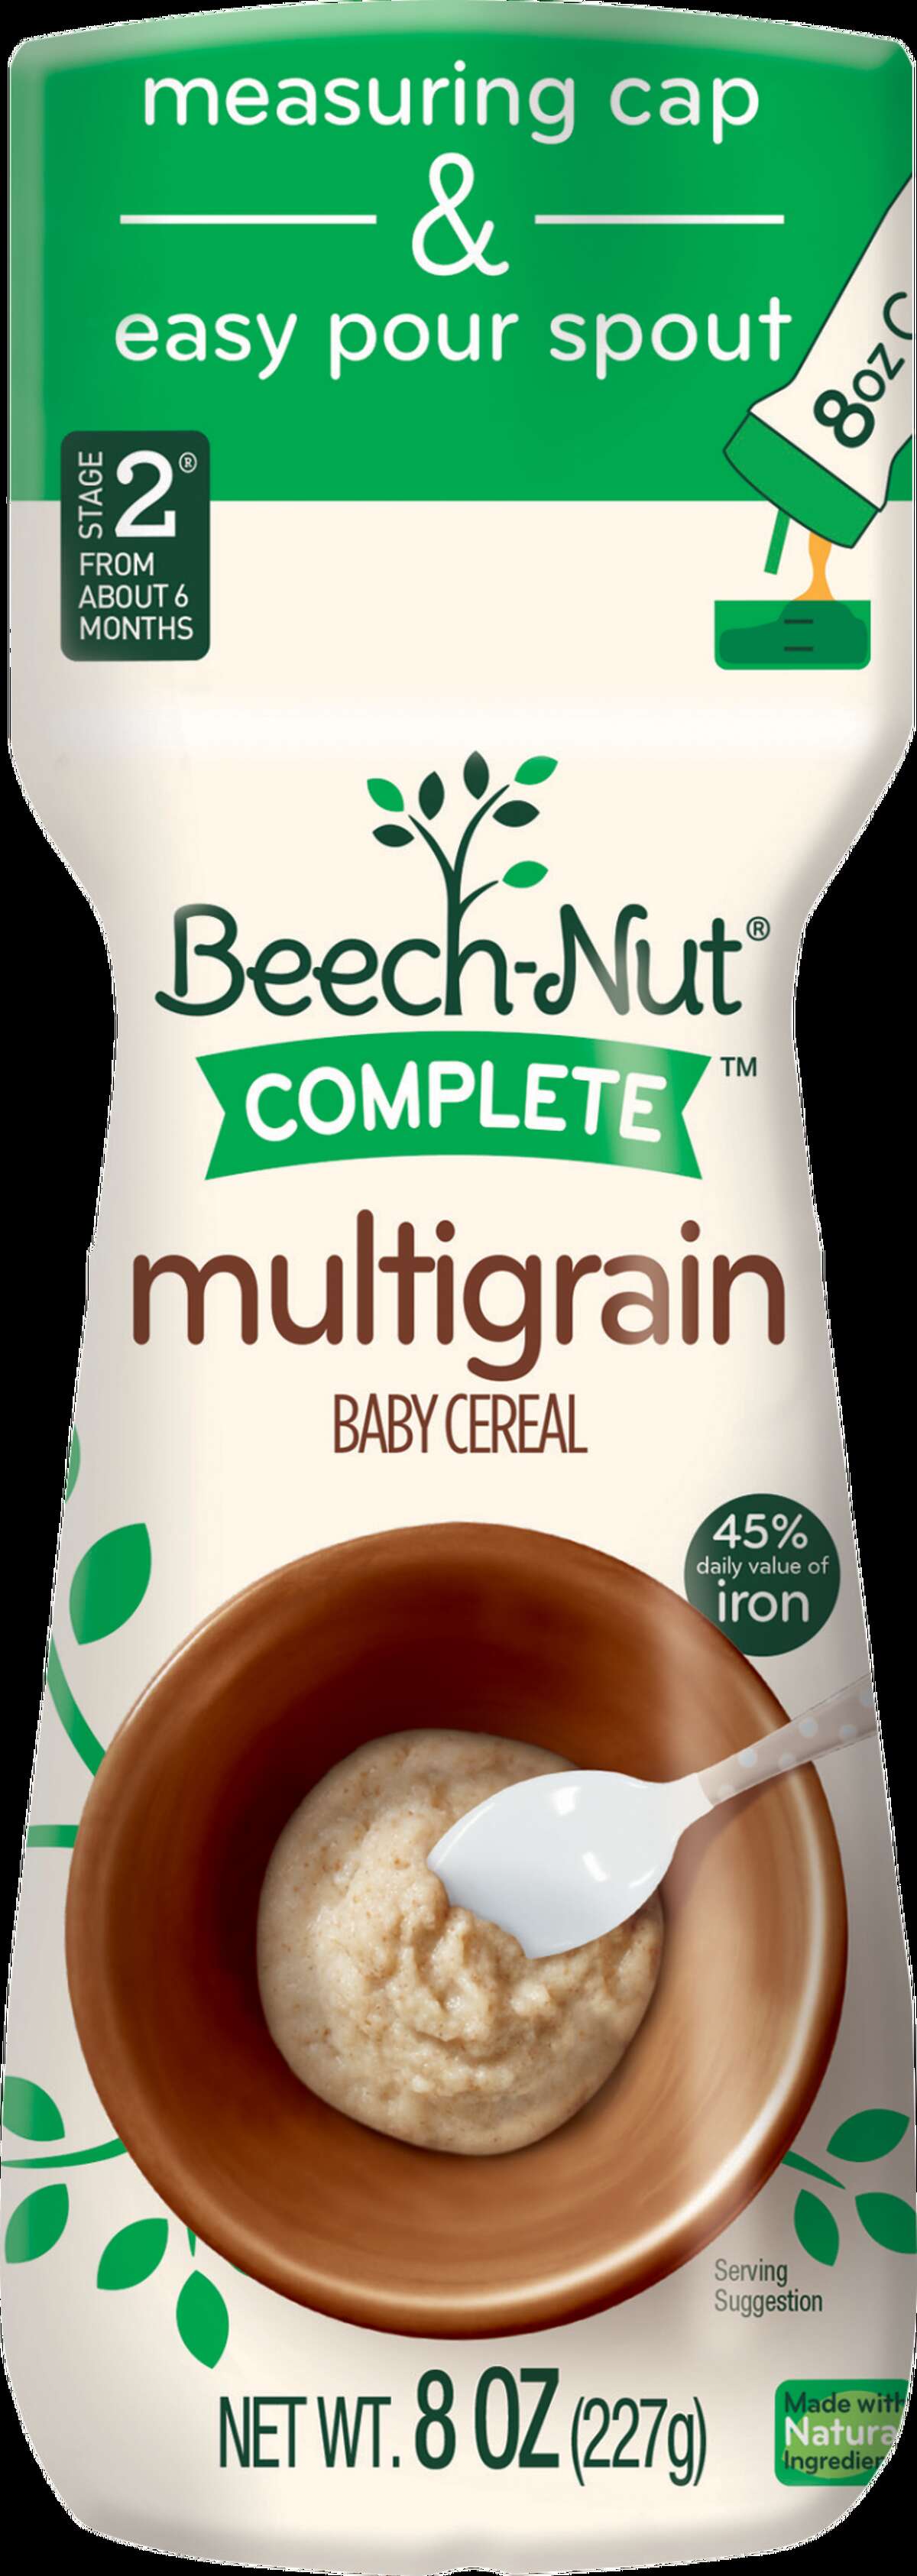 Best baby cereal4. Beech-Nut Stage 2 Multigrain Baby Cereal